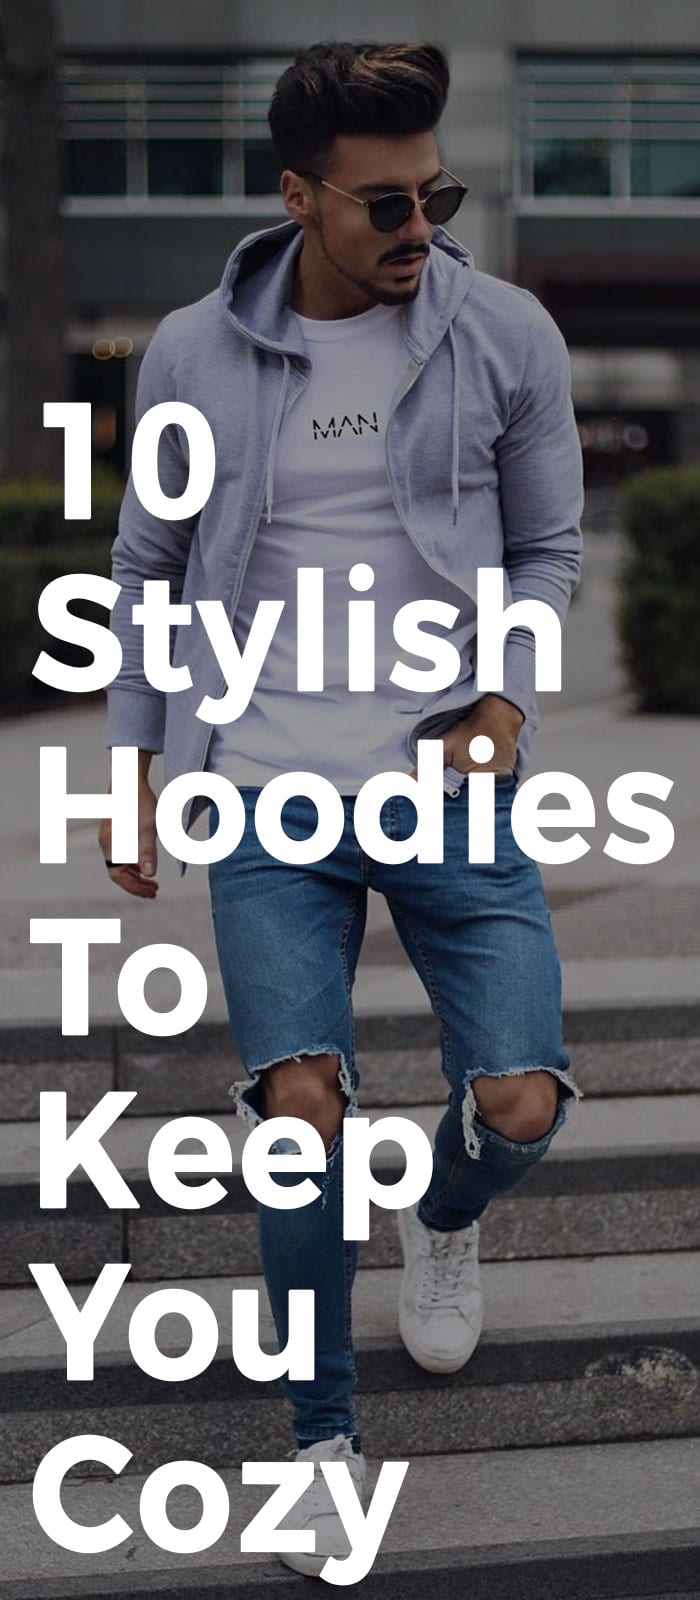 10 Stylish Hoodies To Keep You Cozy.